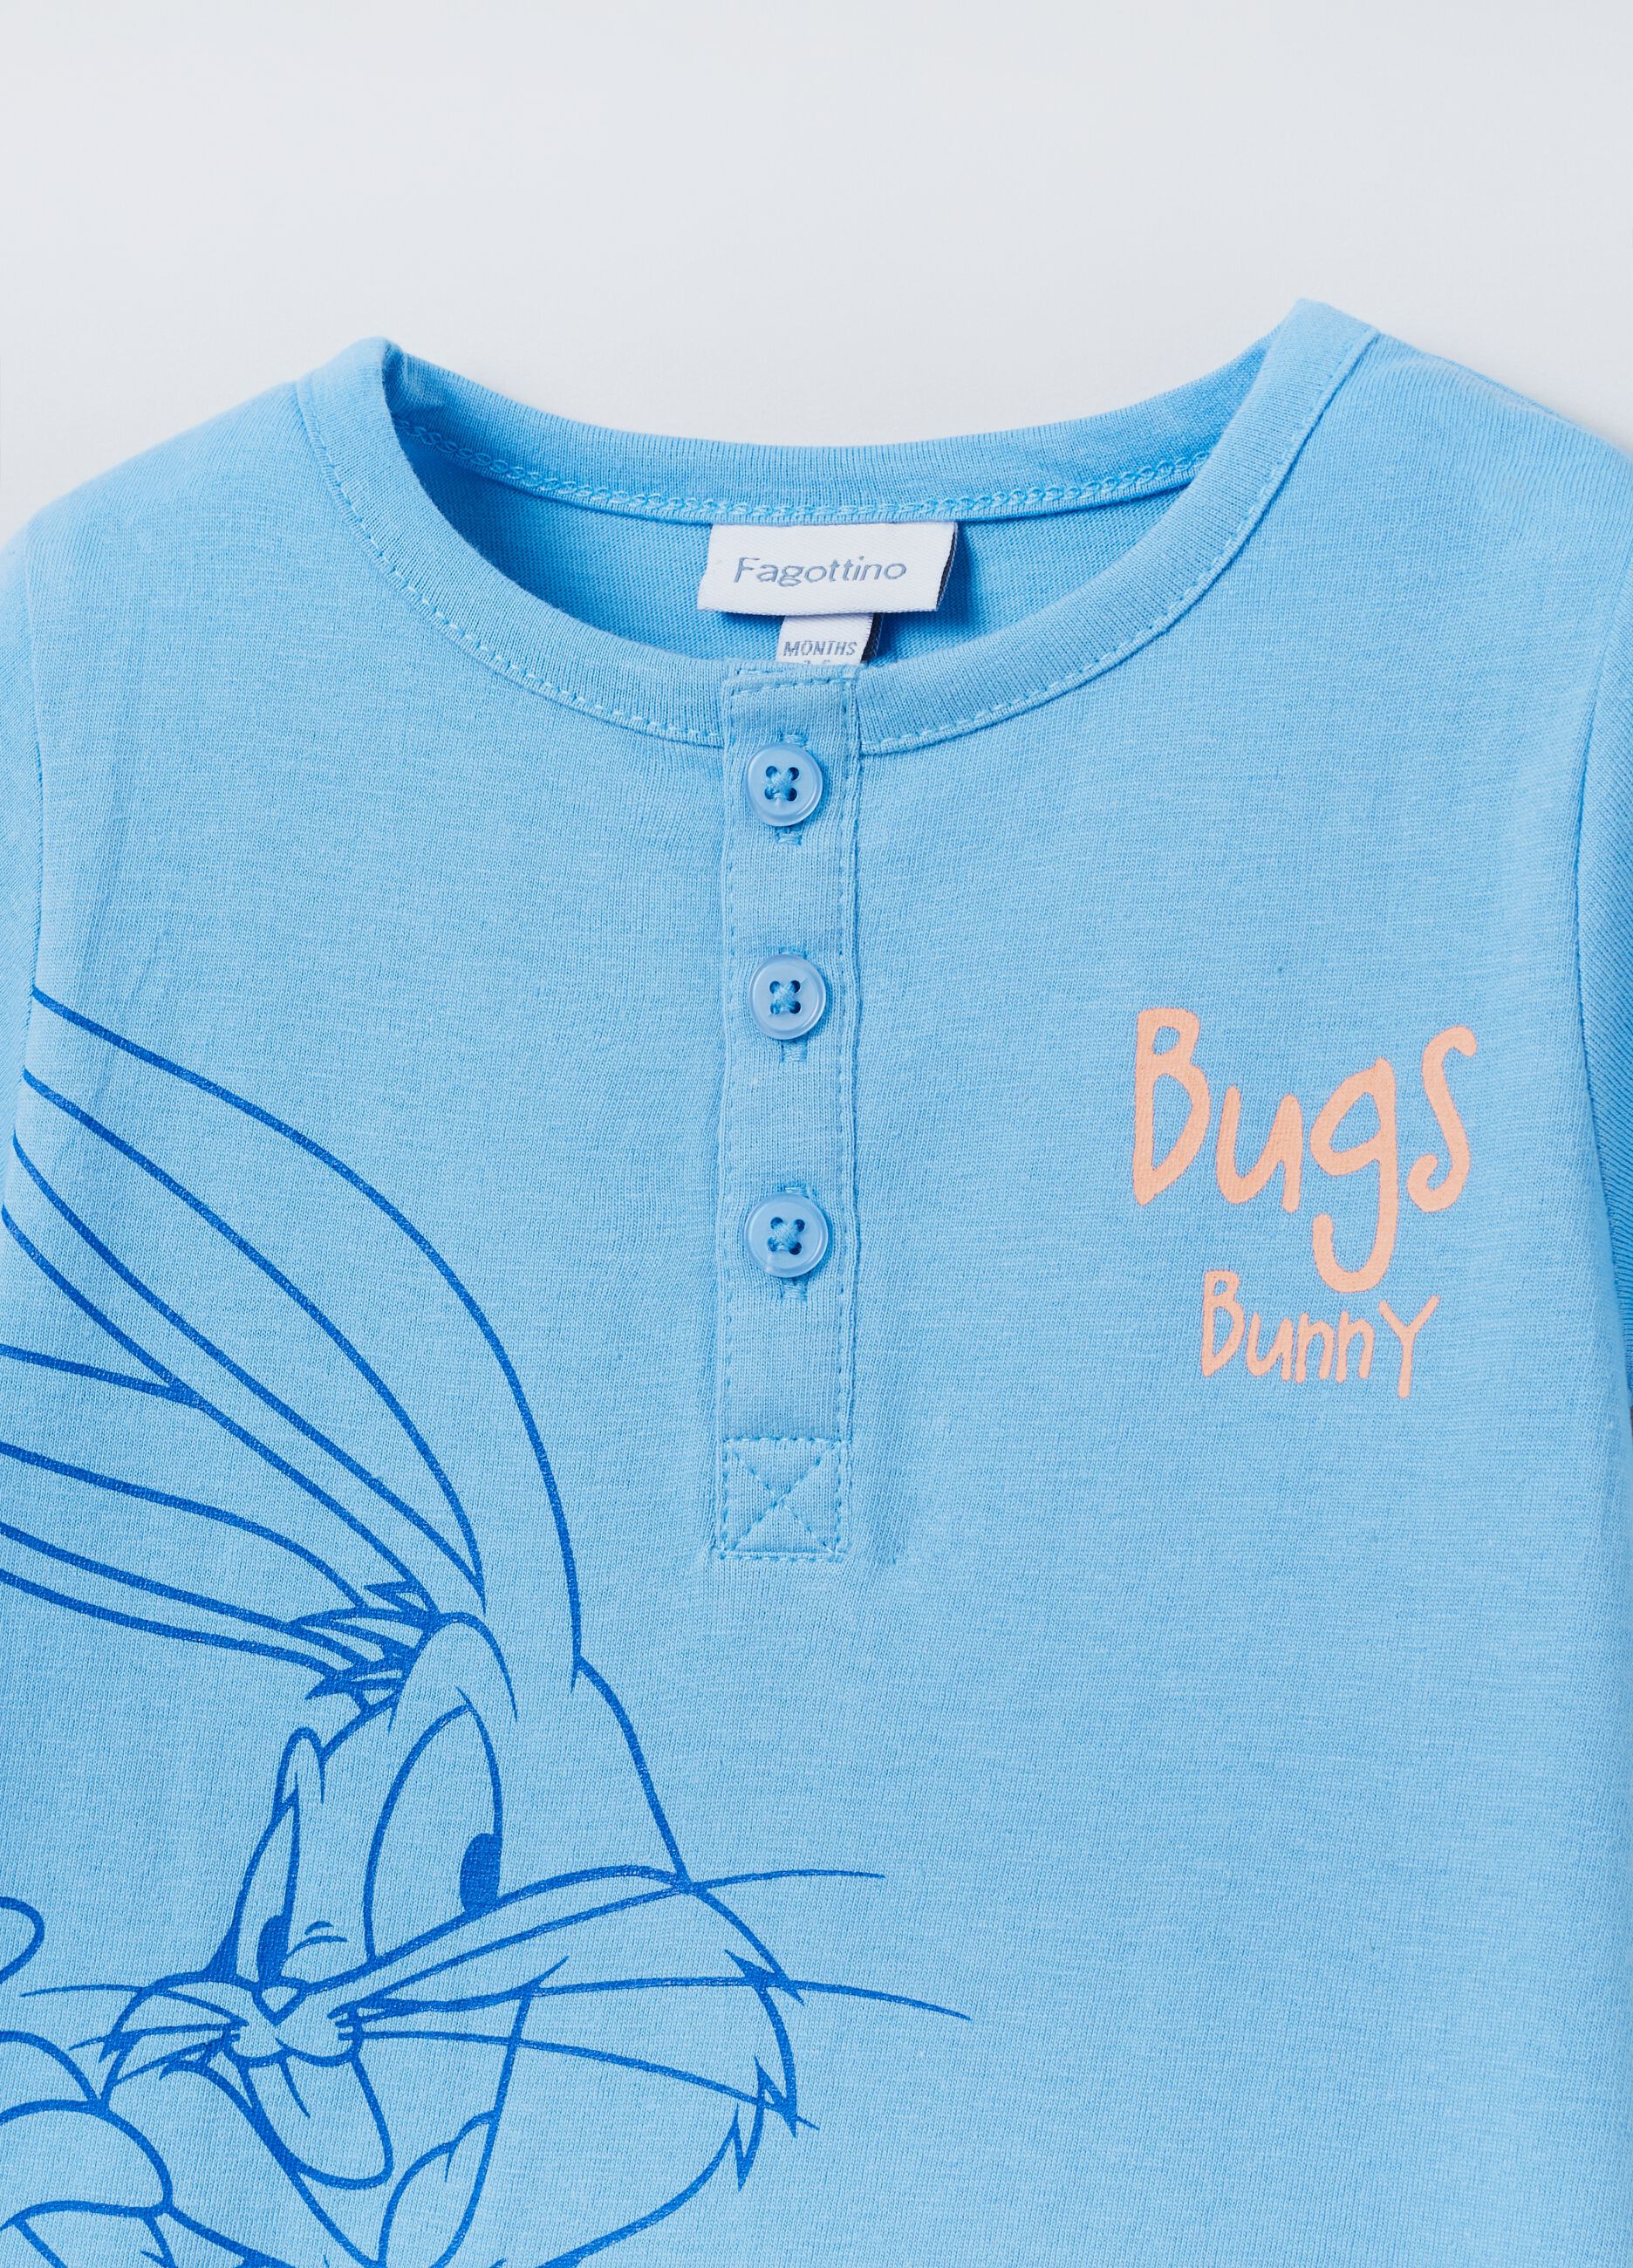 Pyjama romper suit with Bugs Bunny print